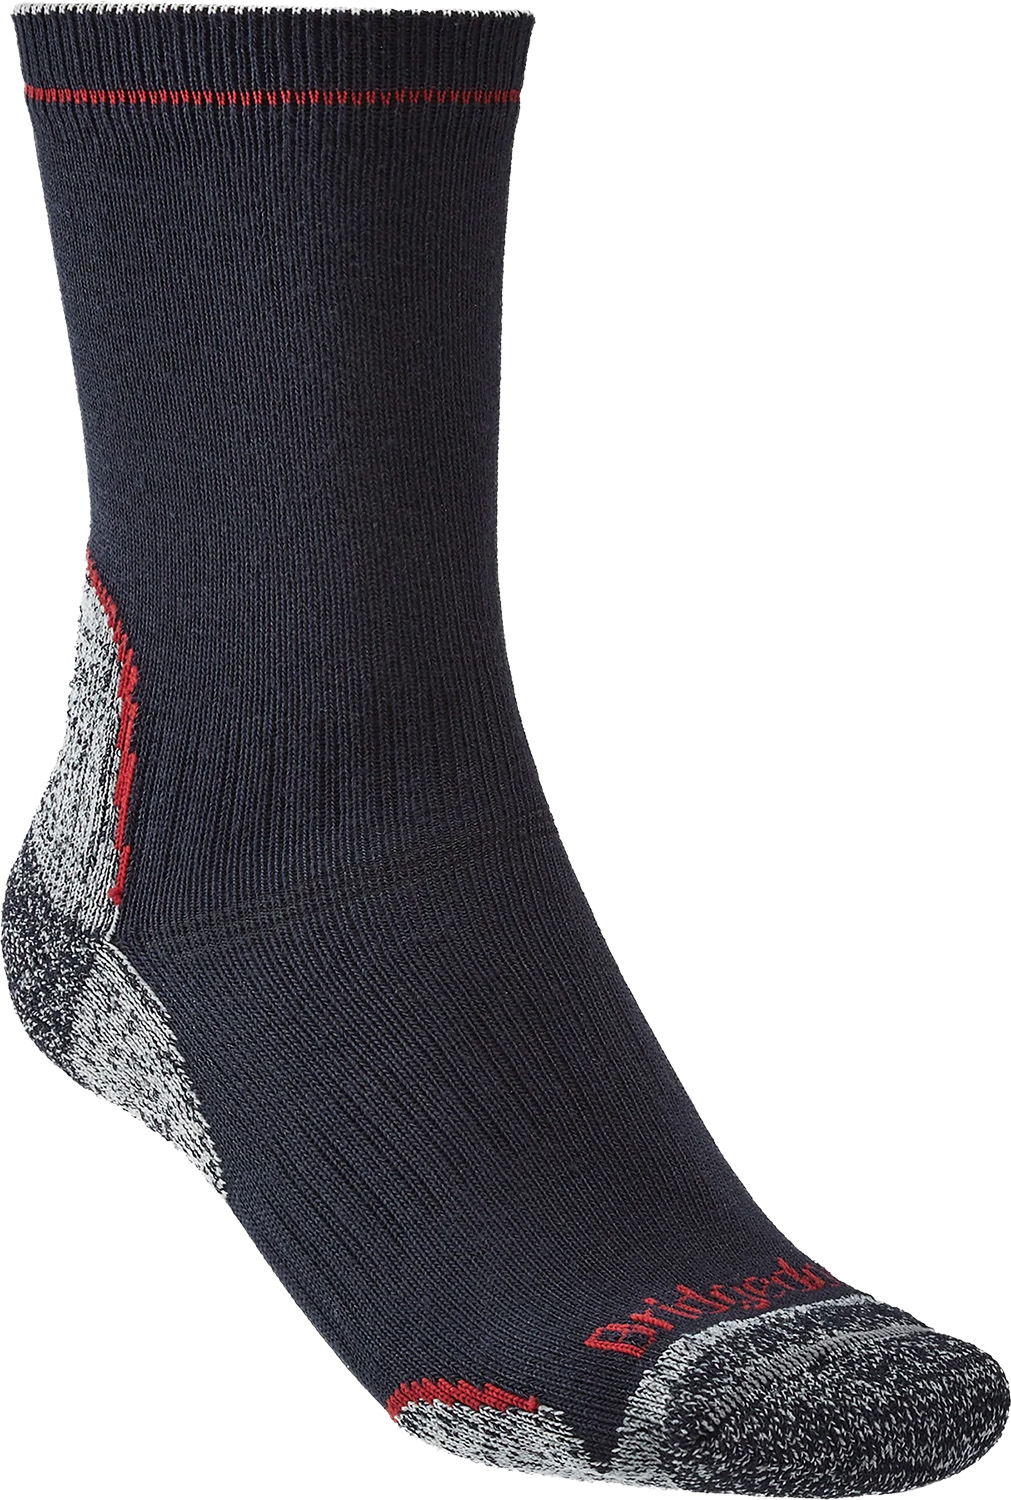 Bridgedale Hike Lightweight T2 Coolmax Boot socks